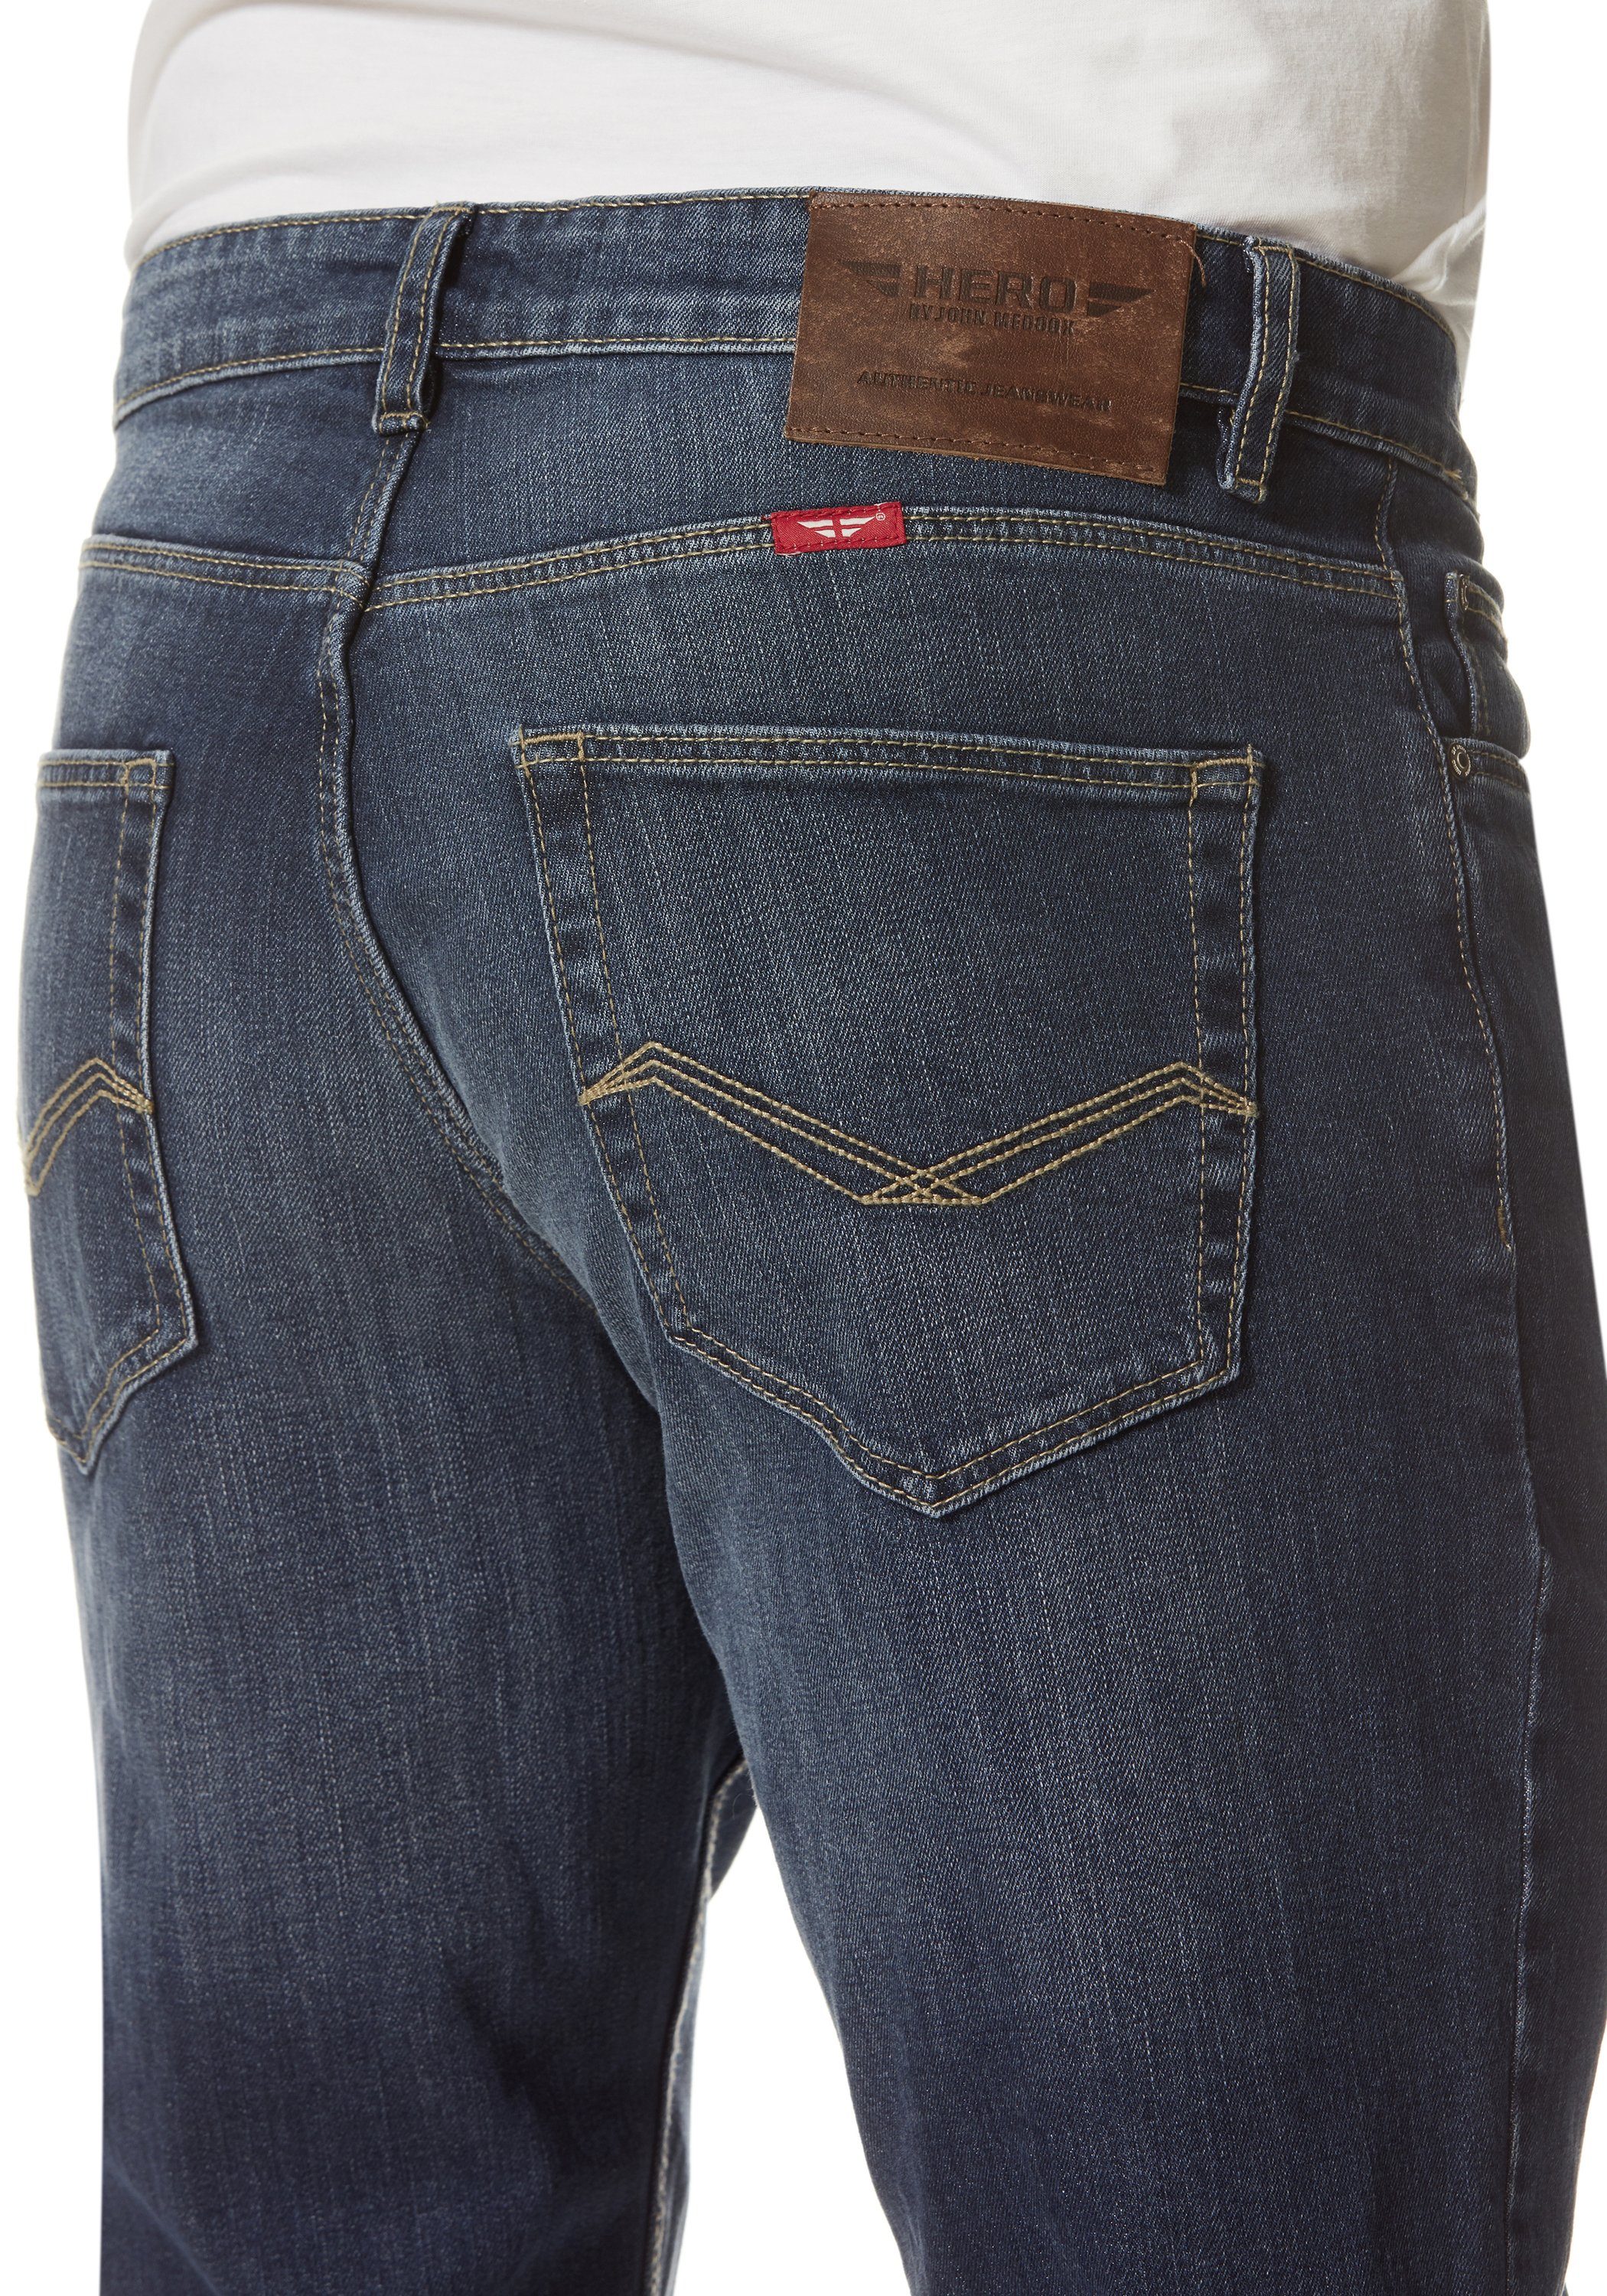 deep Stretch 5-Pocket-Jeans by John used Medoox Phoenix Denim Big Cut Straight HERO blue